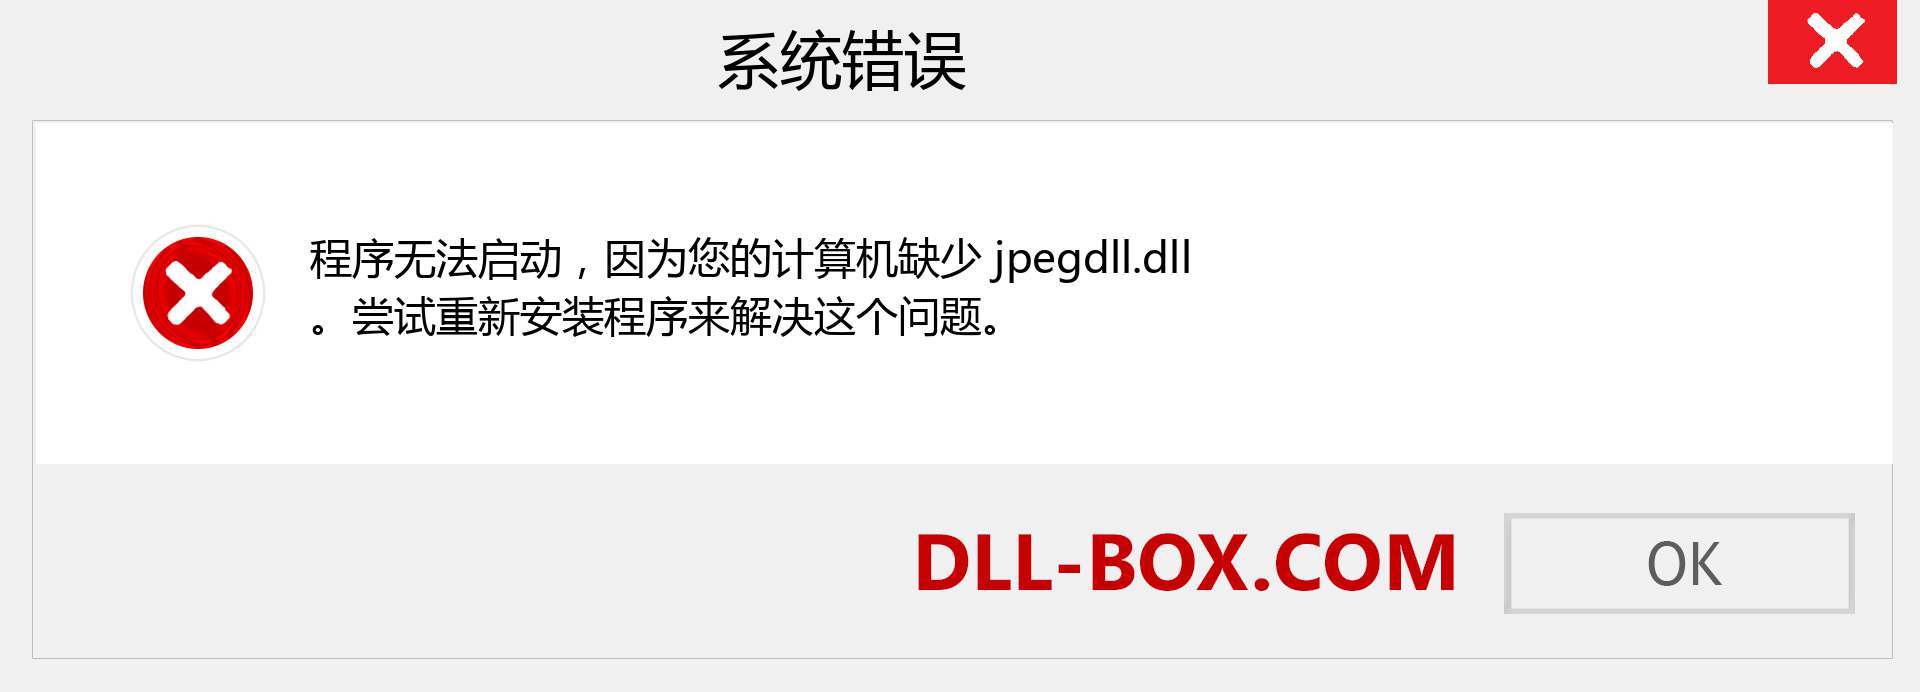 jpegdll.dll 文件丢失？。 适用于 Windows 7、8、10 的下载 - 修复 Windows、照片、图像上的 jpegdll dll 丢失错误